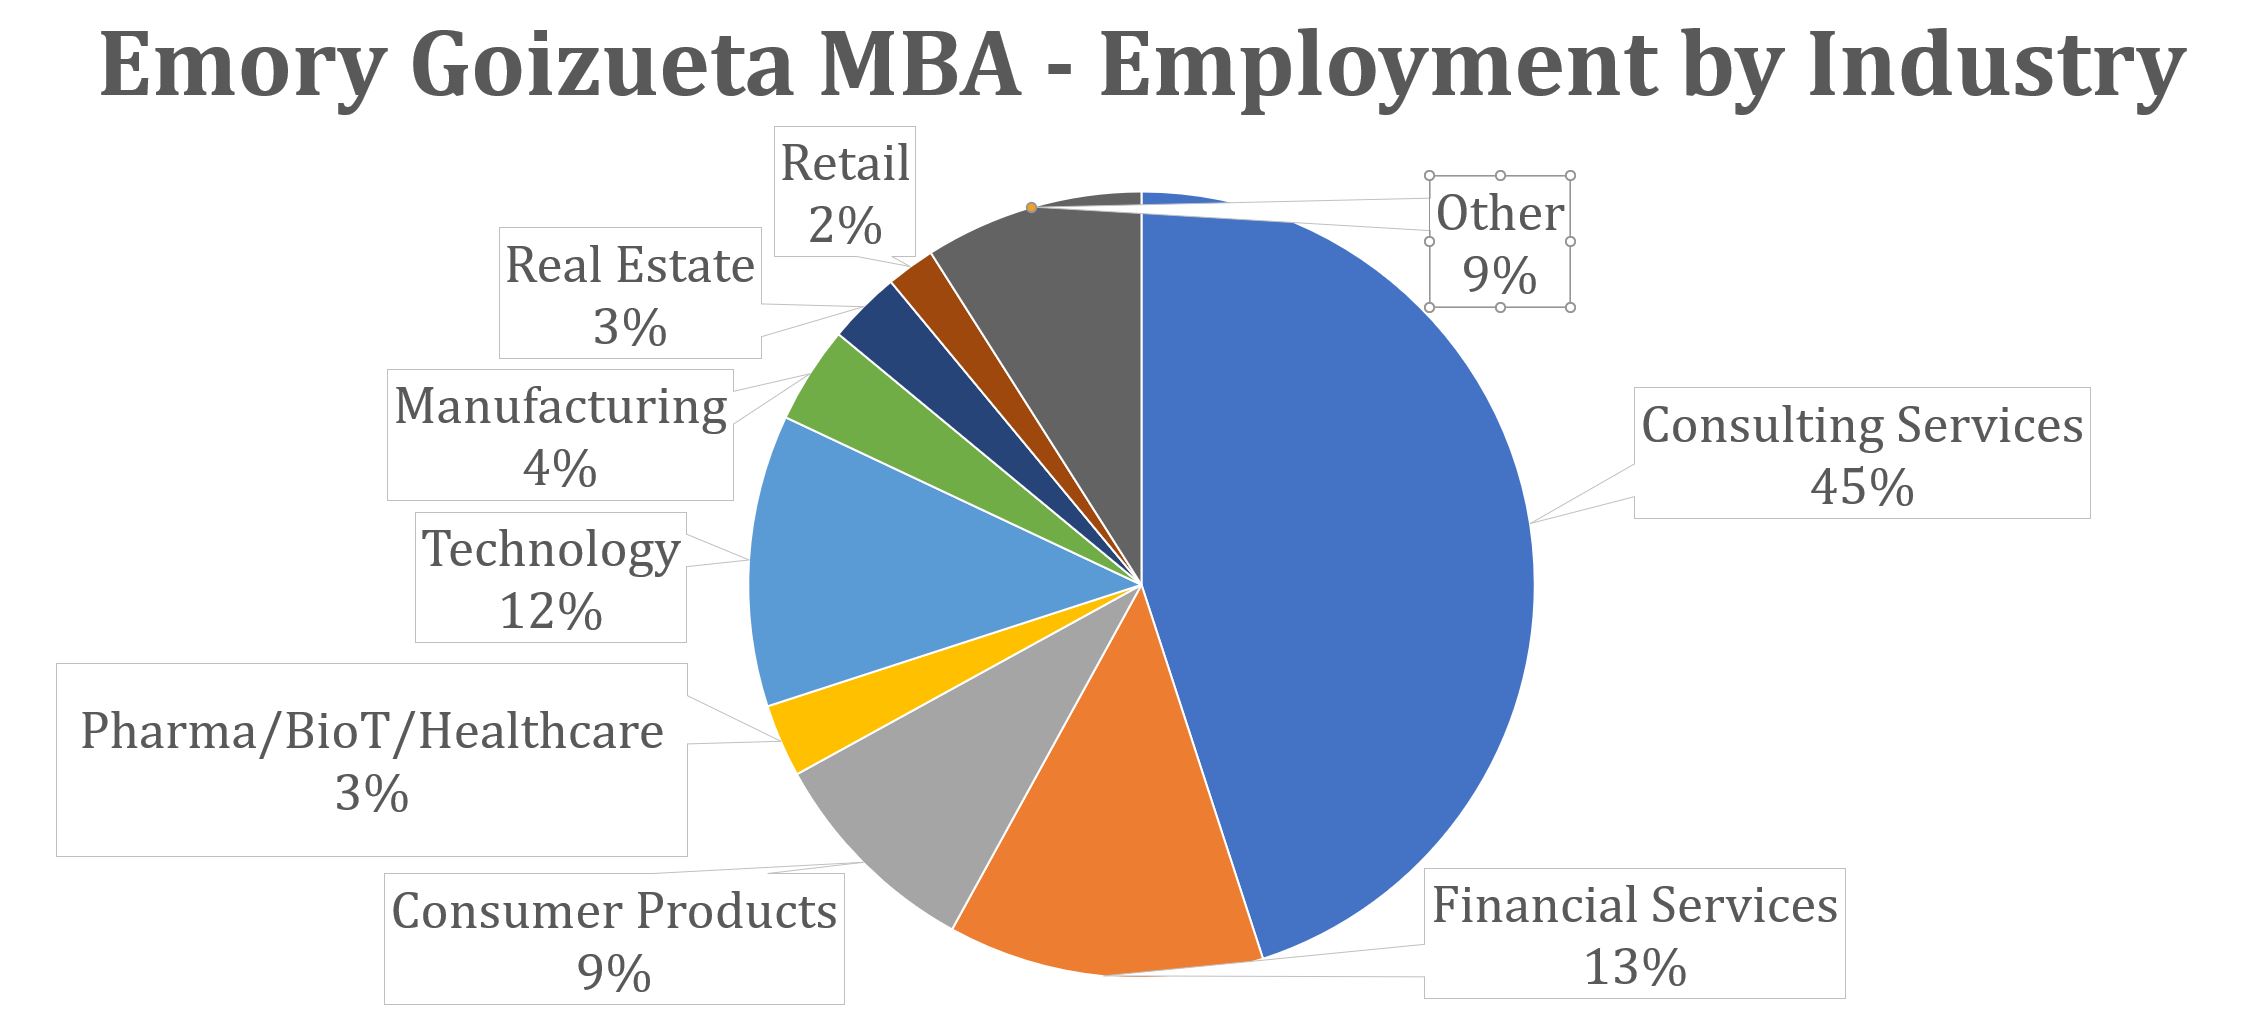 Emory Goizueta MBA - Employment by Industry